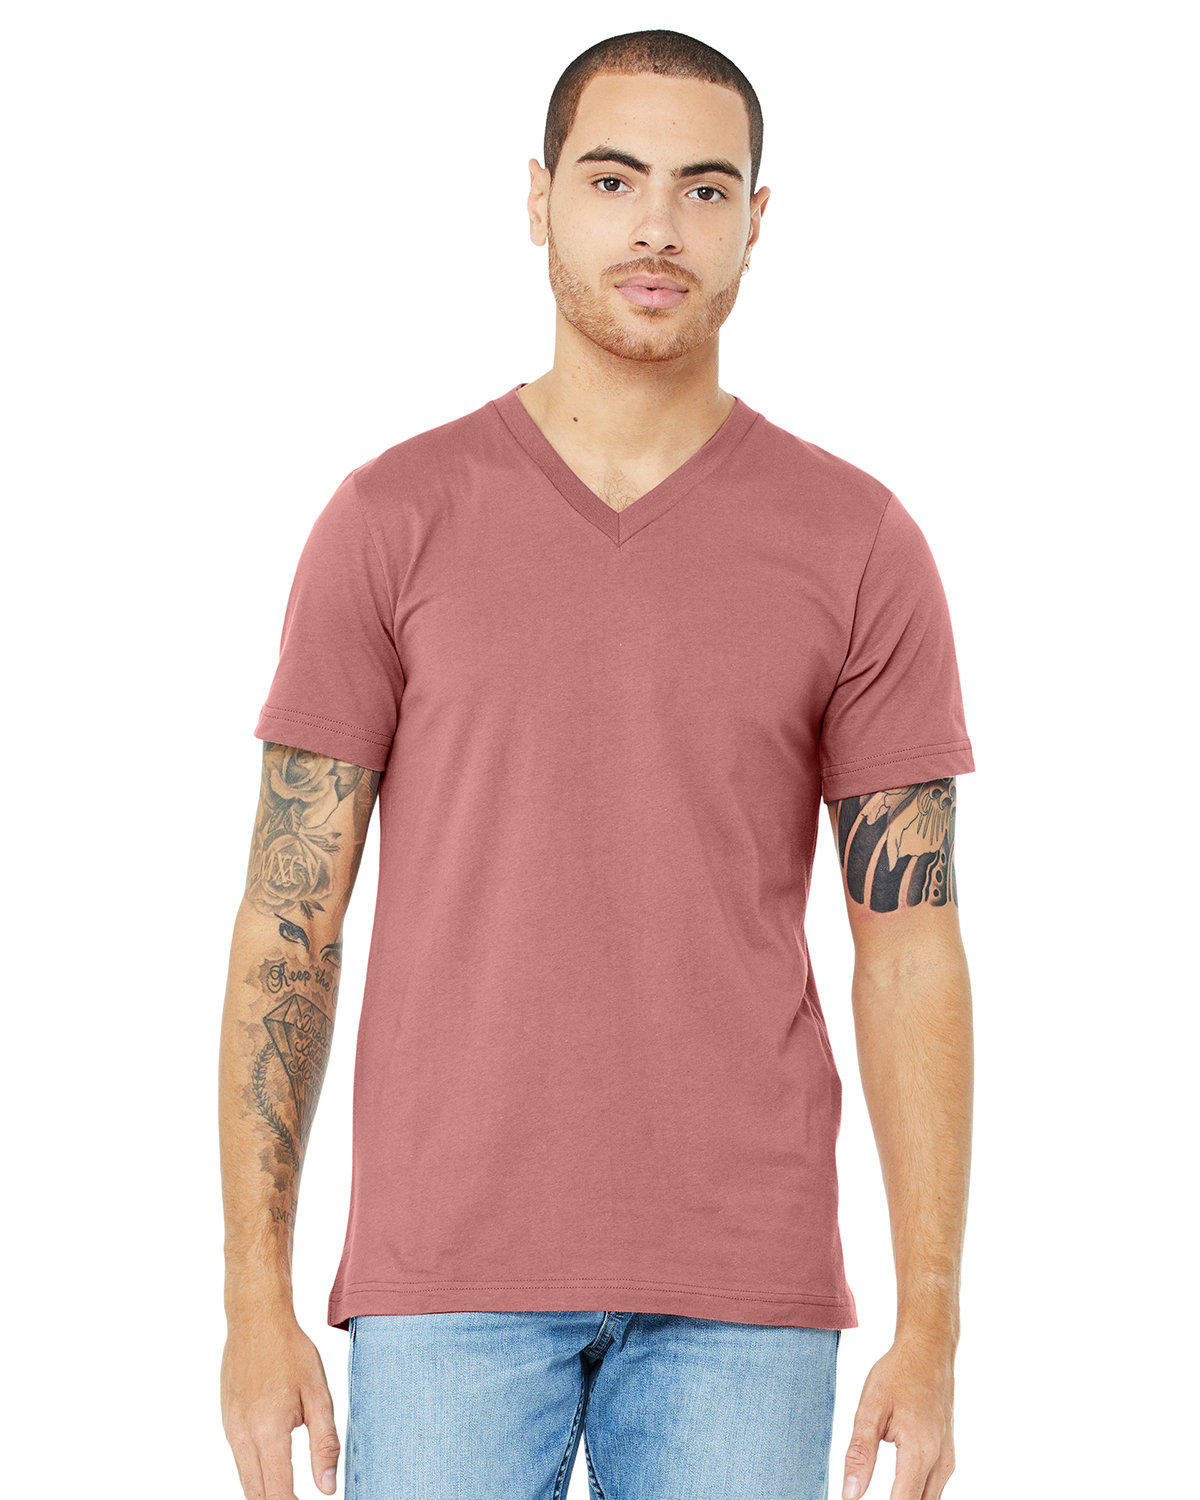 Bella + Canvas Unisex Jersey Short-Sleeve V-Neck T-Shirt MAUVE 